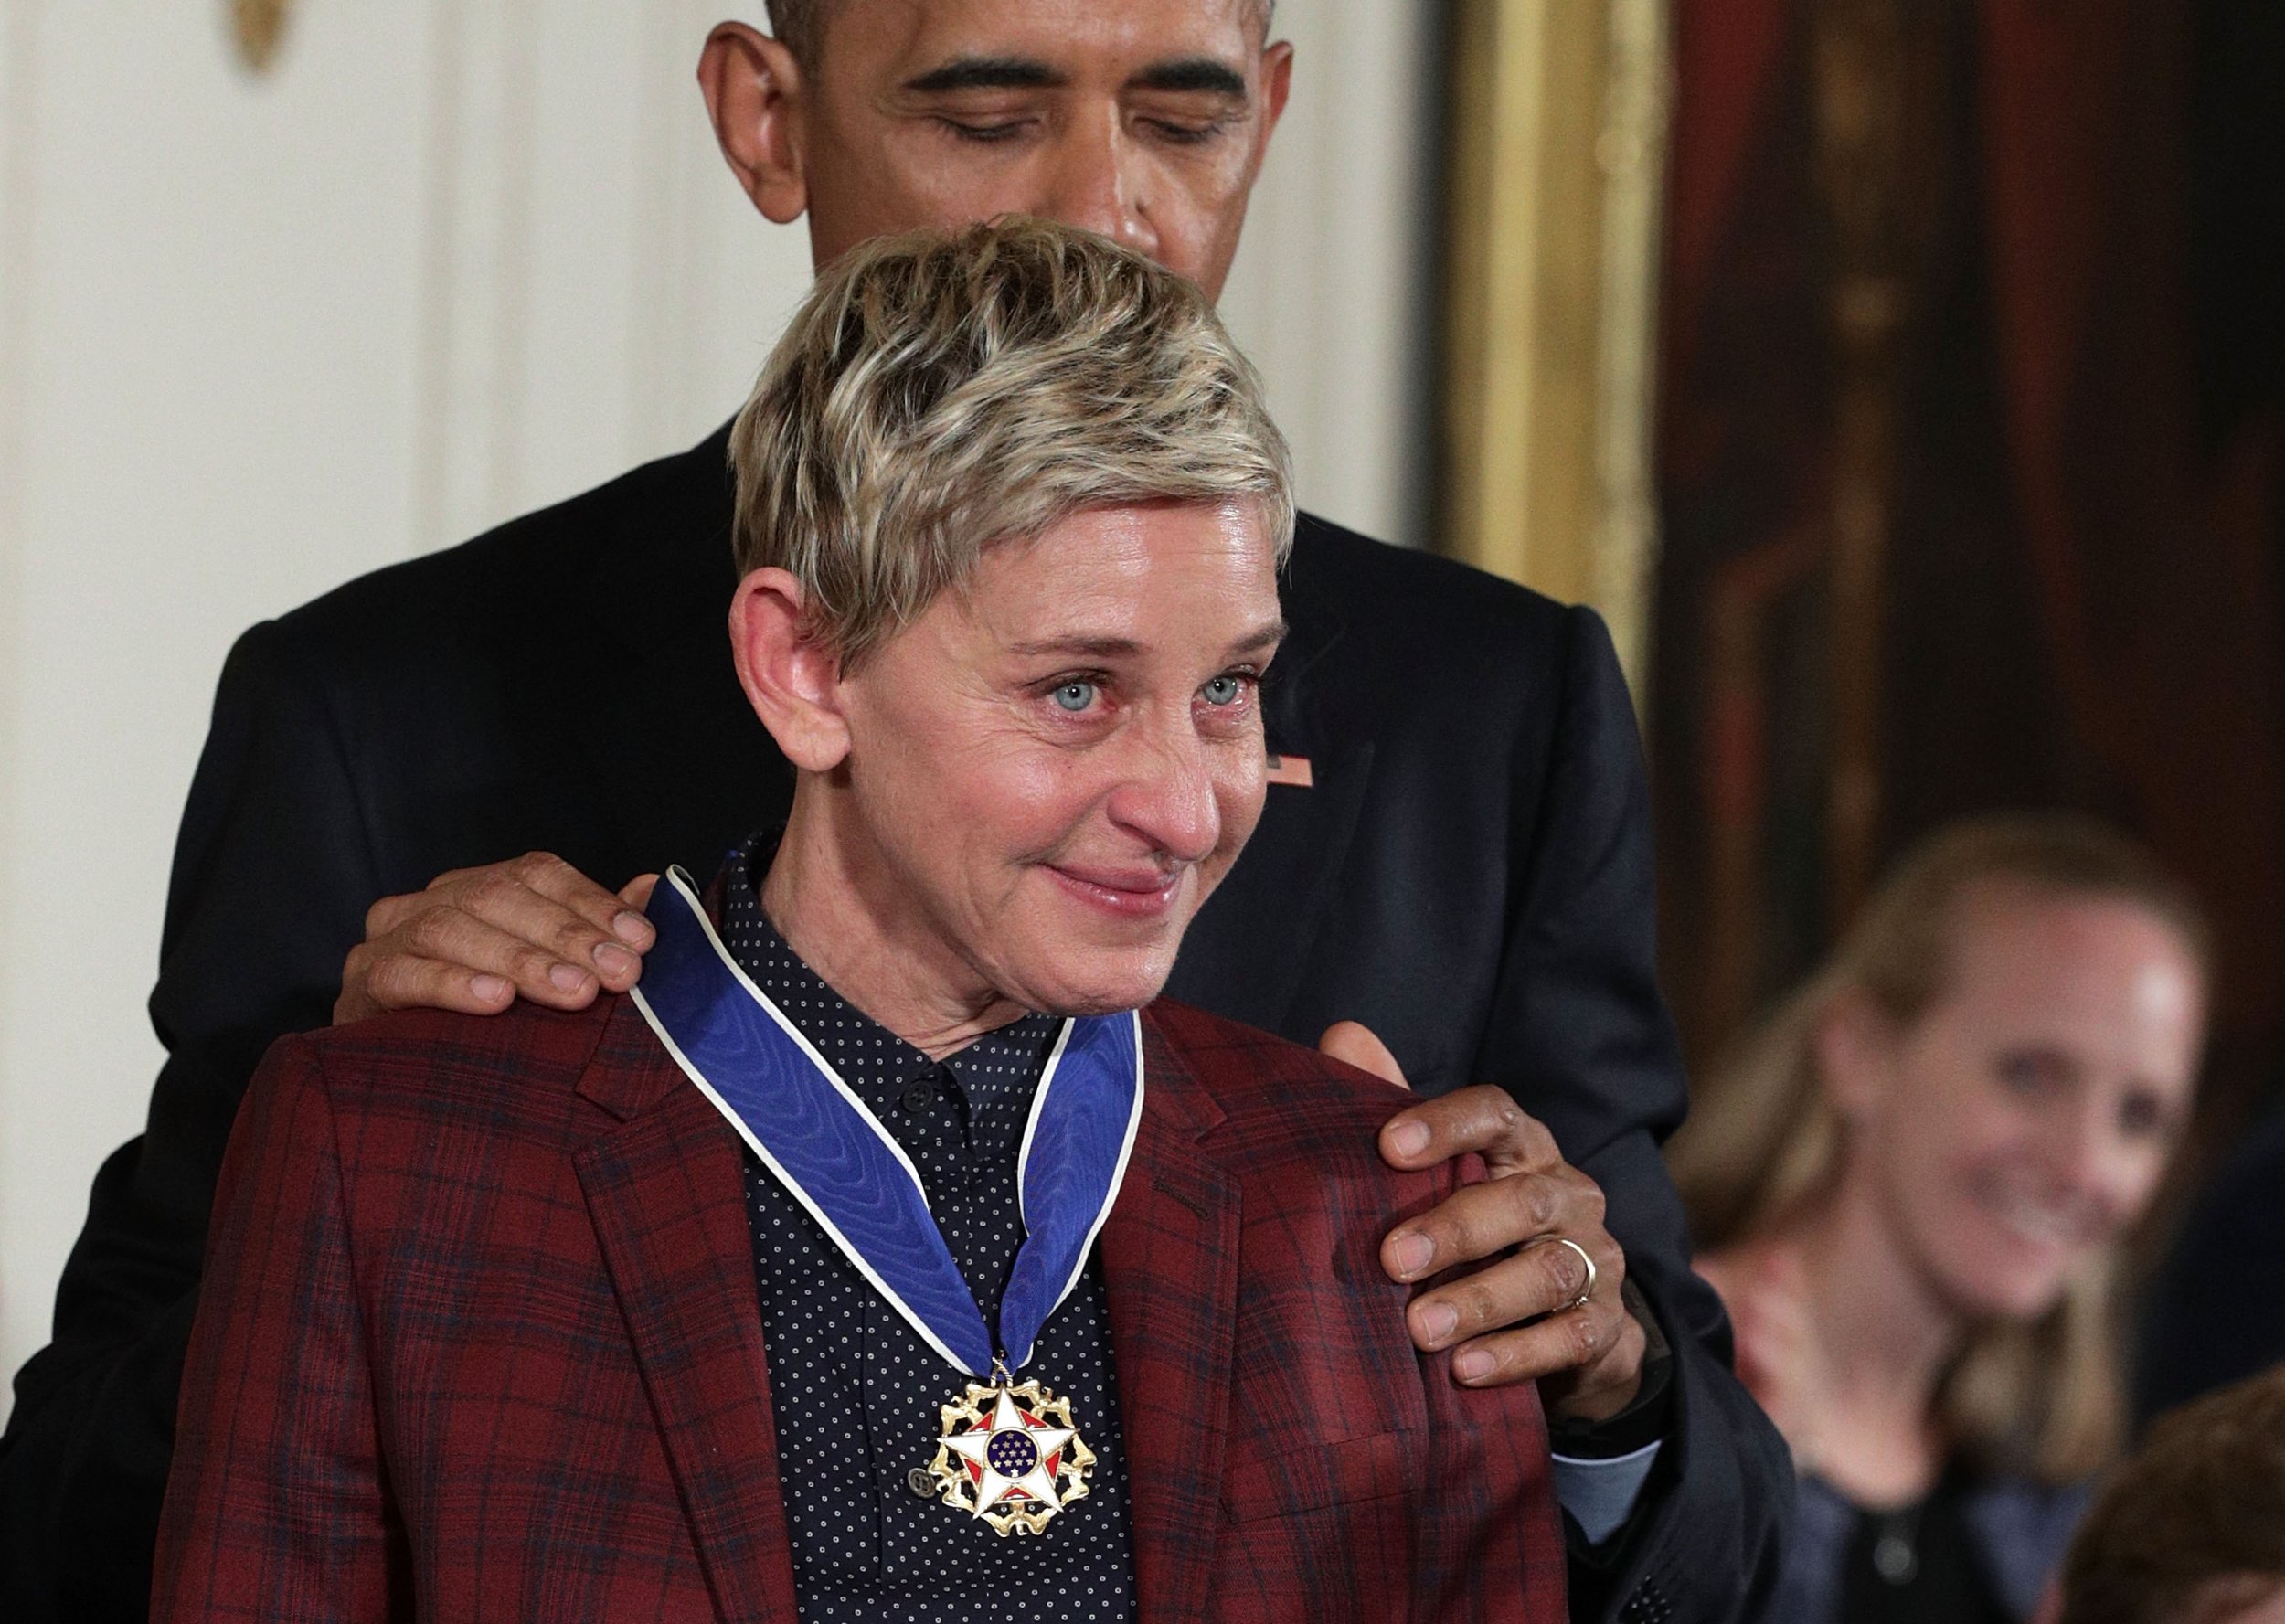 President Barack Obama Presents Ellen DeGeneres With Medal for Gay Rights Influence